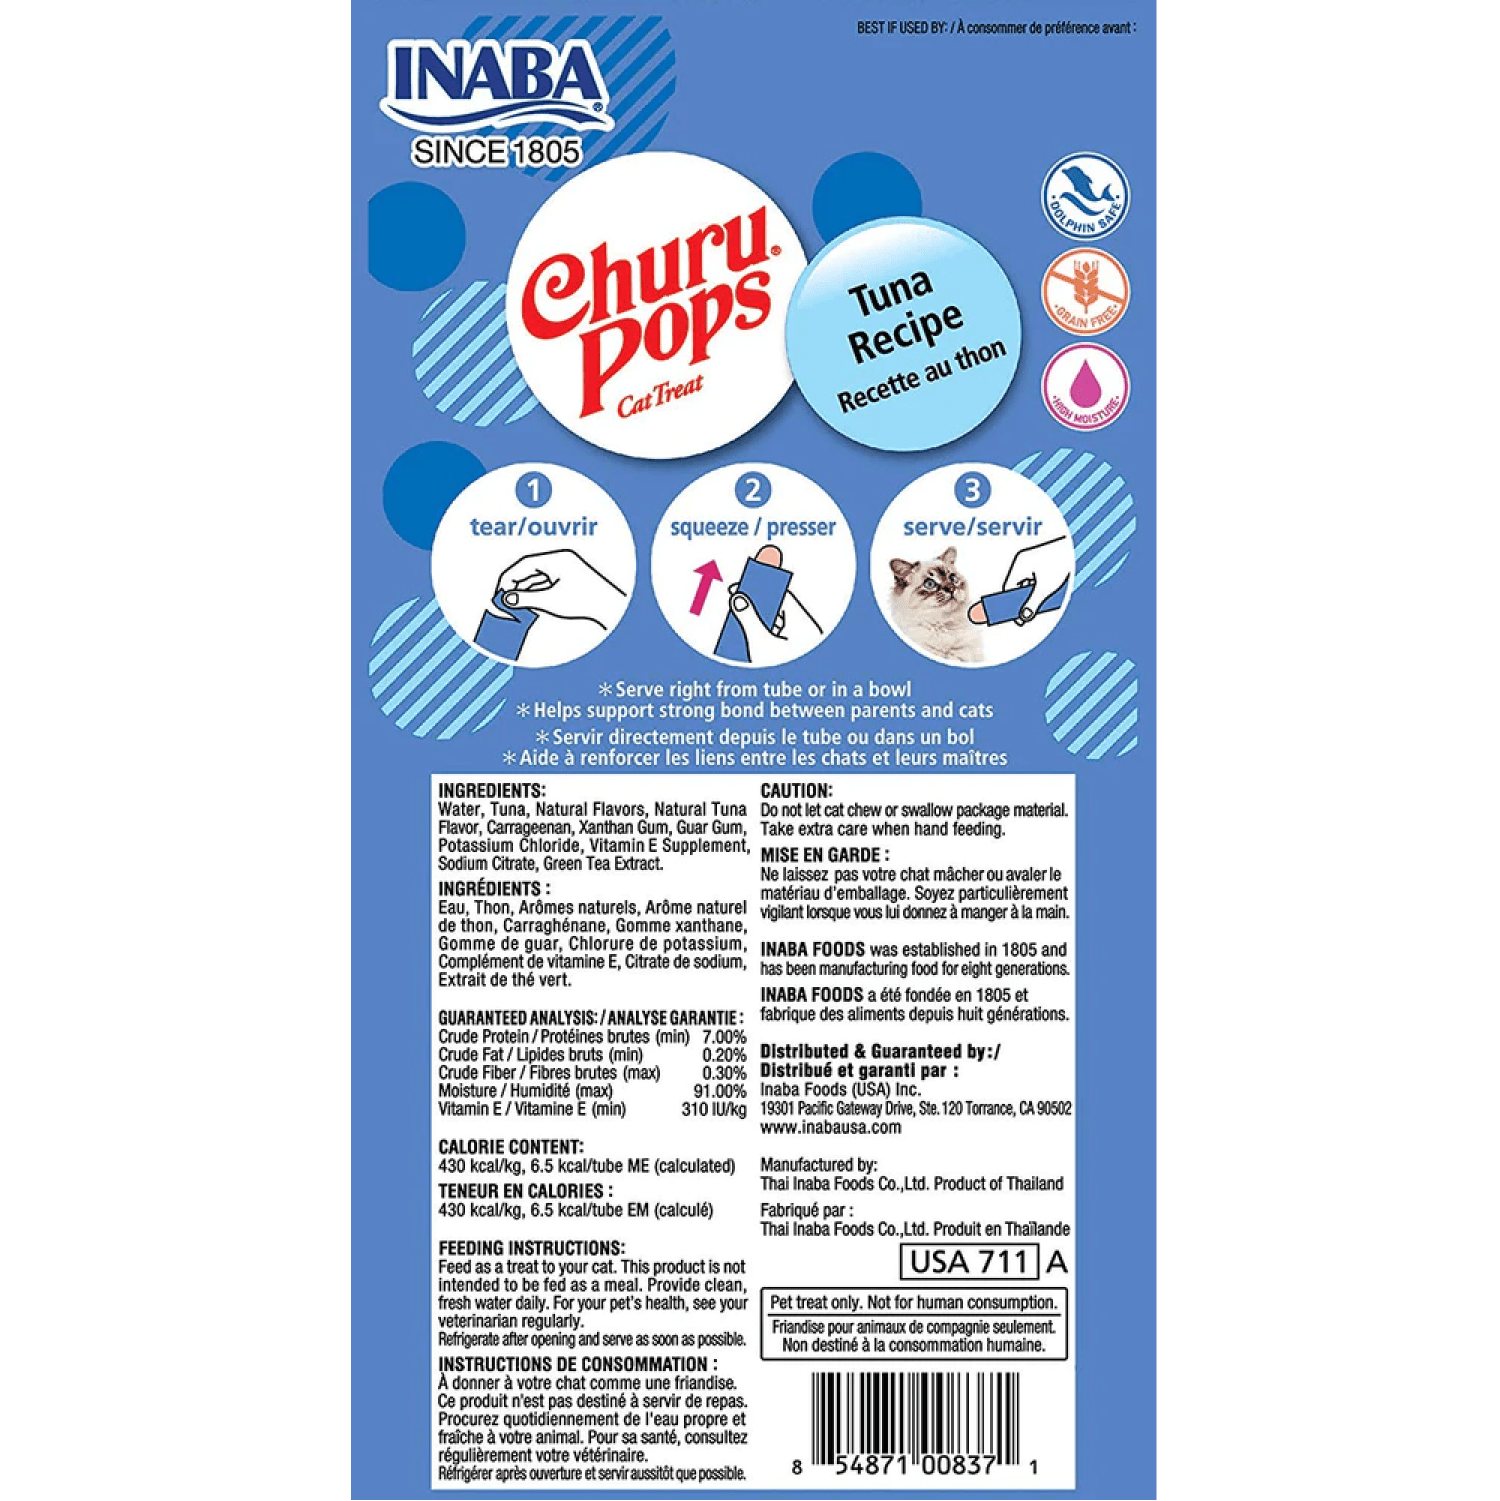 INABA Churu Pops Tuna Creamy Cat Treats